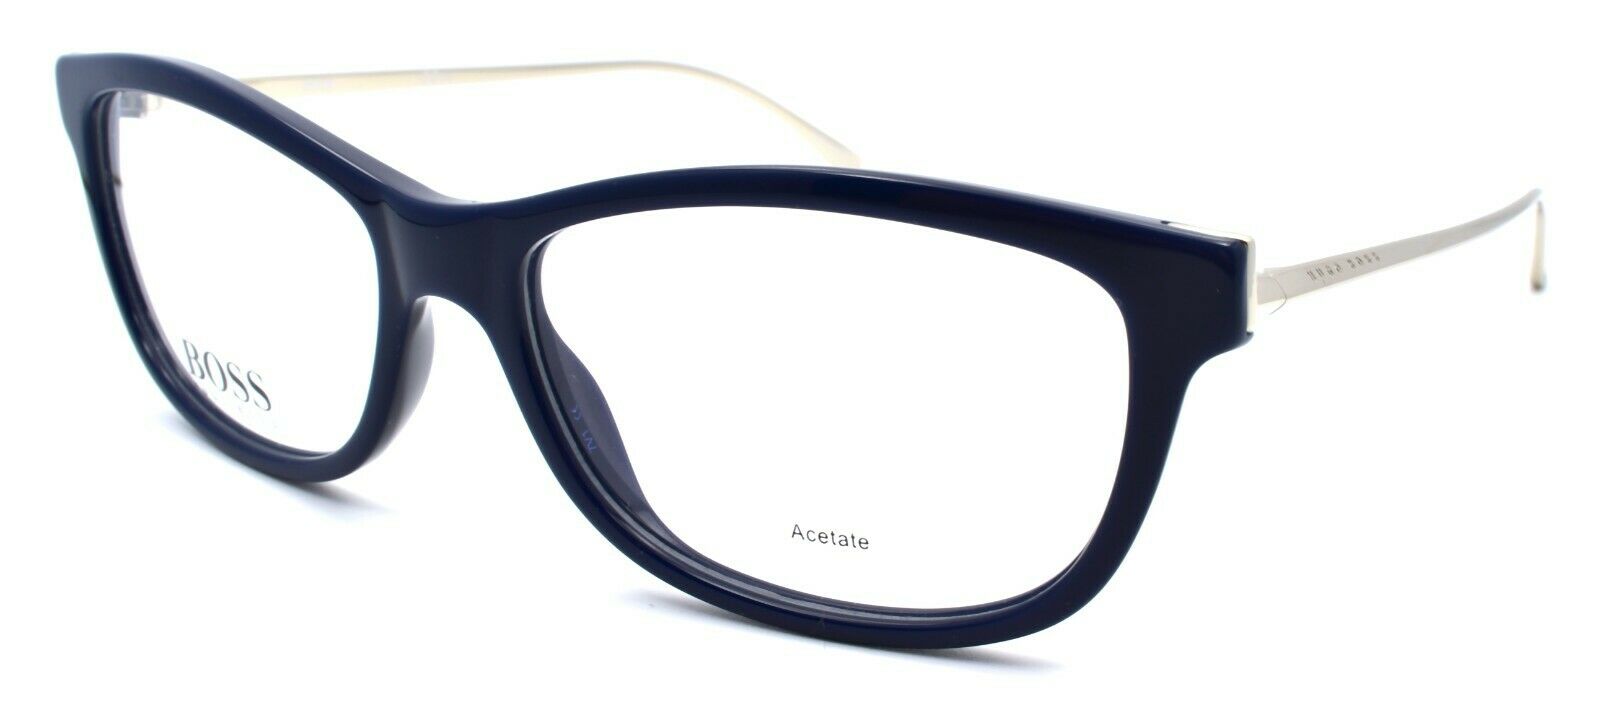 1-BOSS by Hugo Boss 0895 0S7 Women's Eyeglasses Frames 54-16-140 Blue-762753505330-IKSpecs